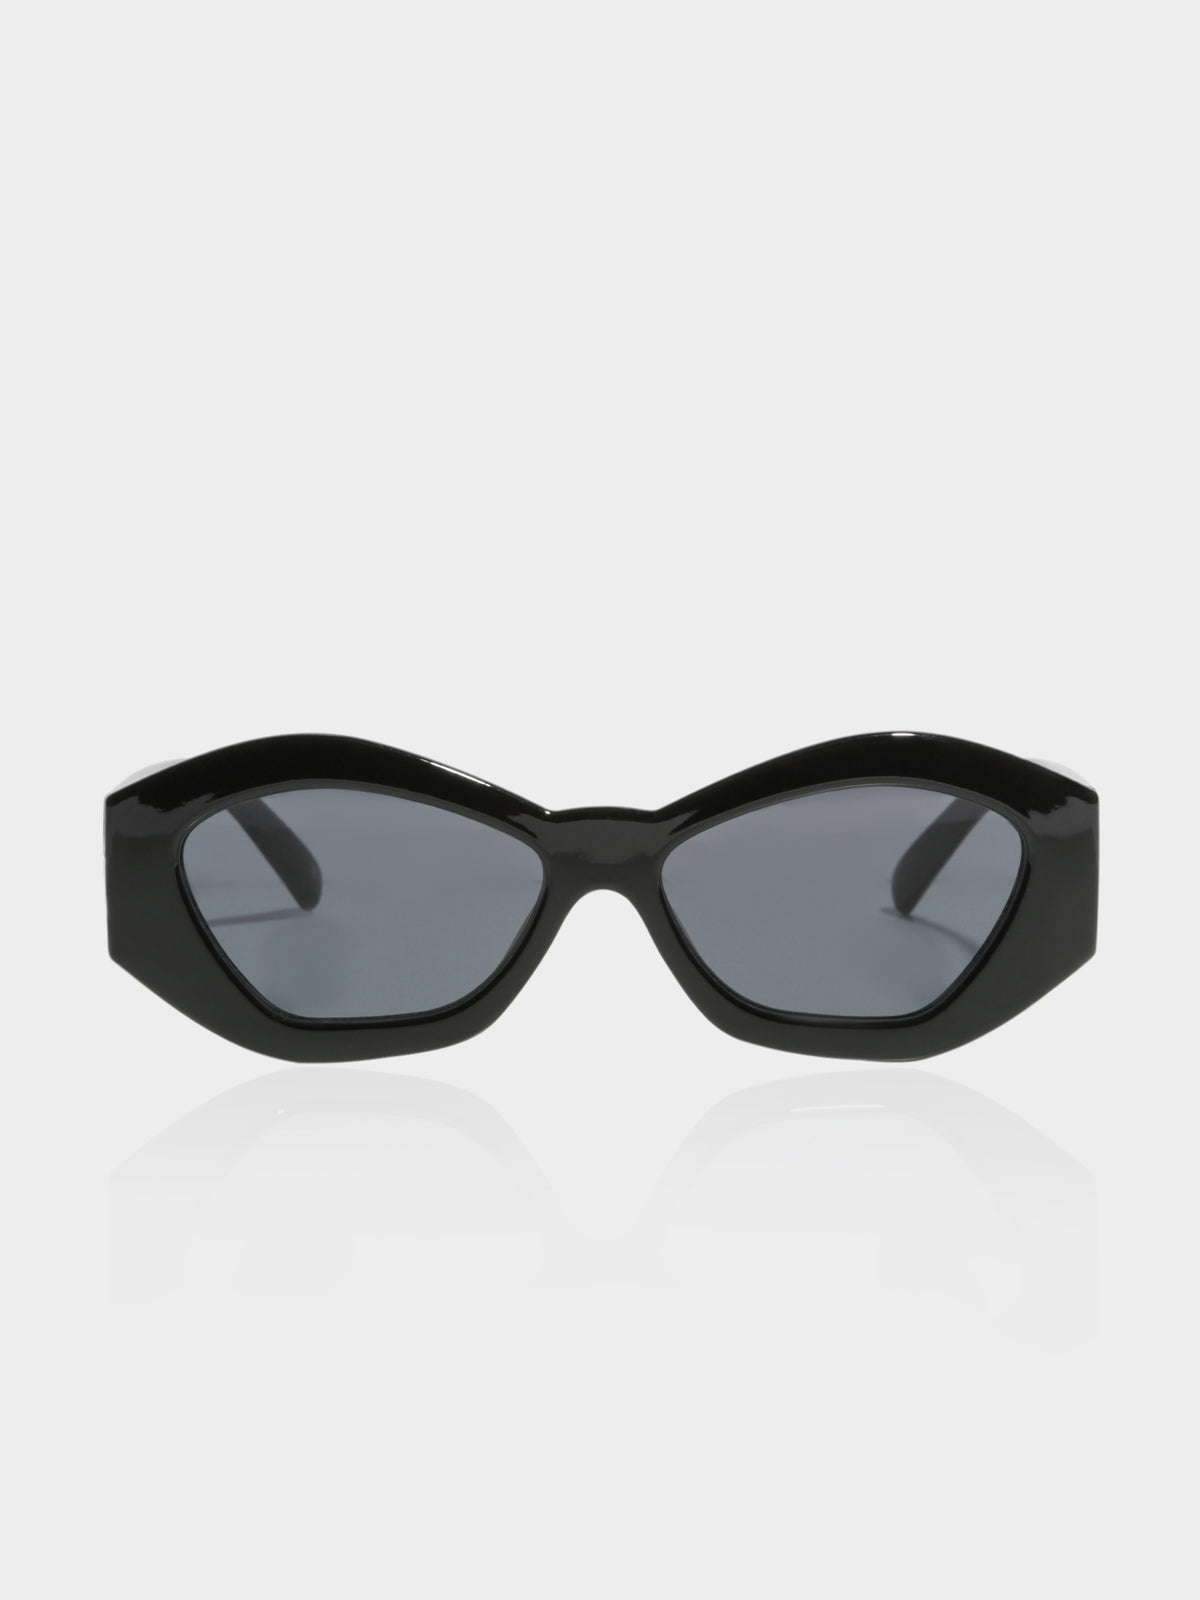 The Ginchiest Sunglasses in Black